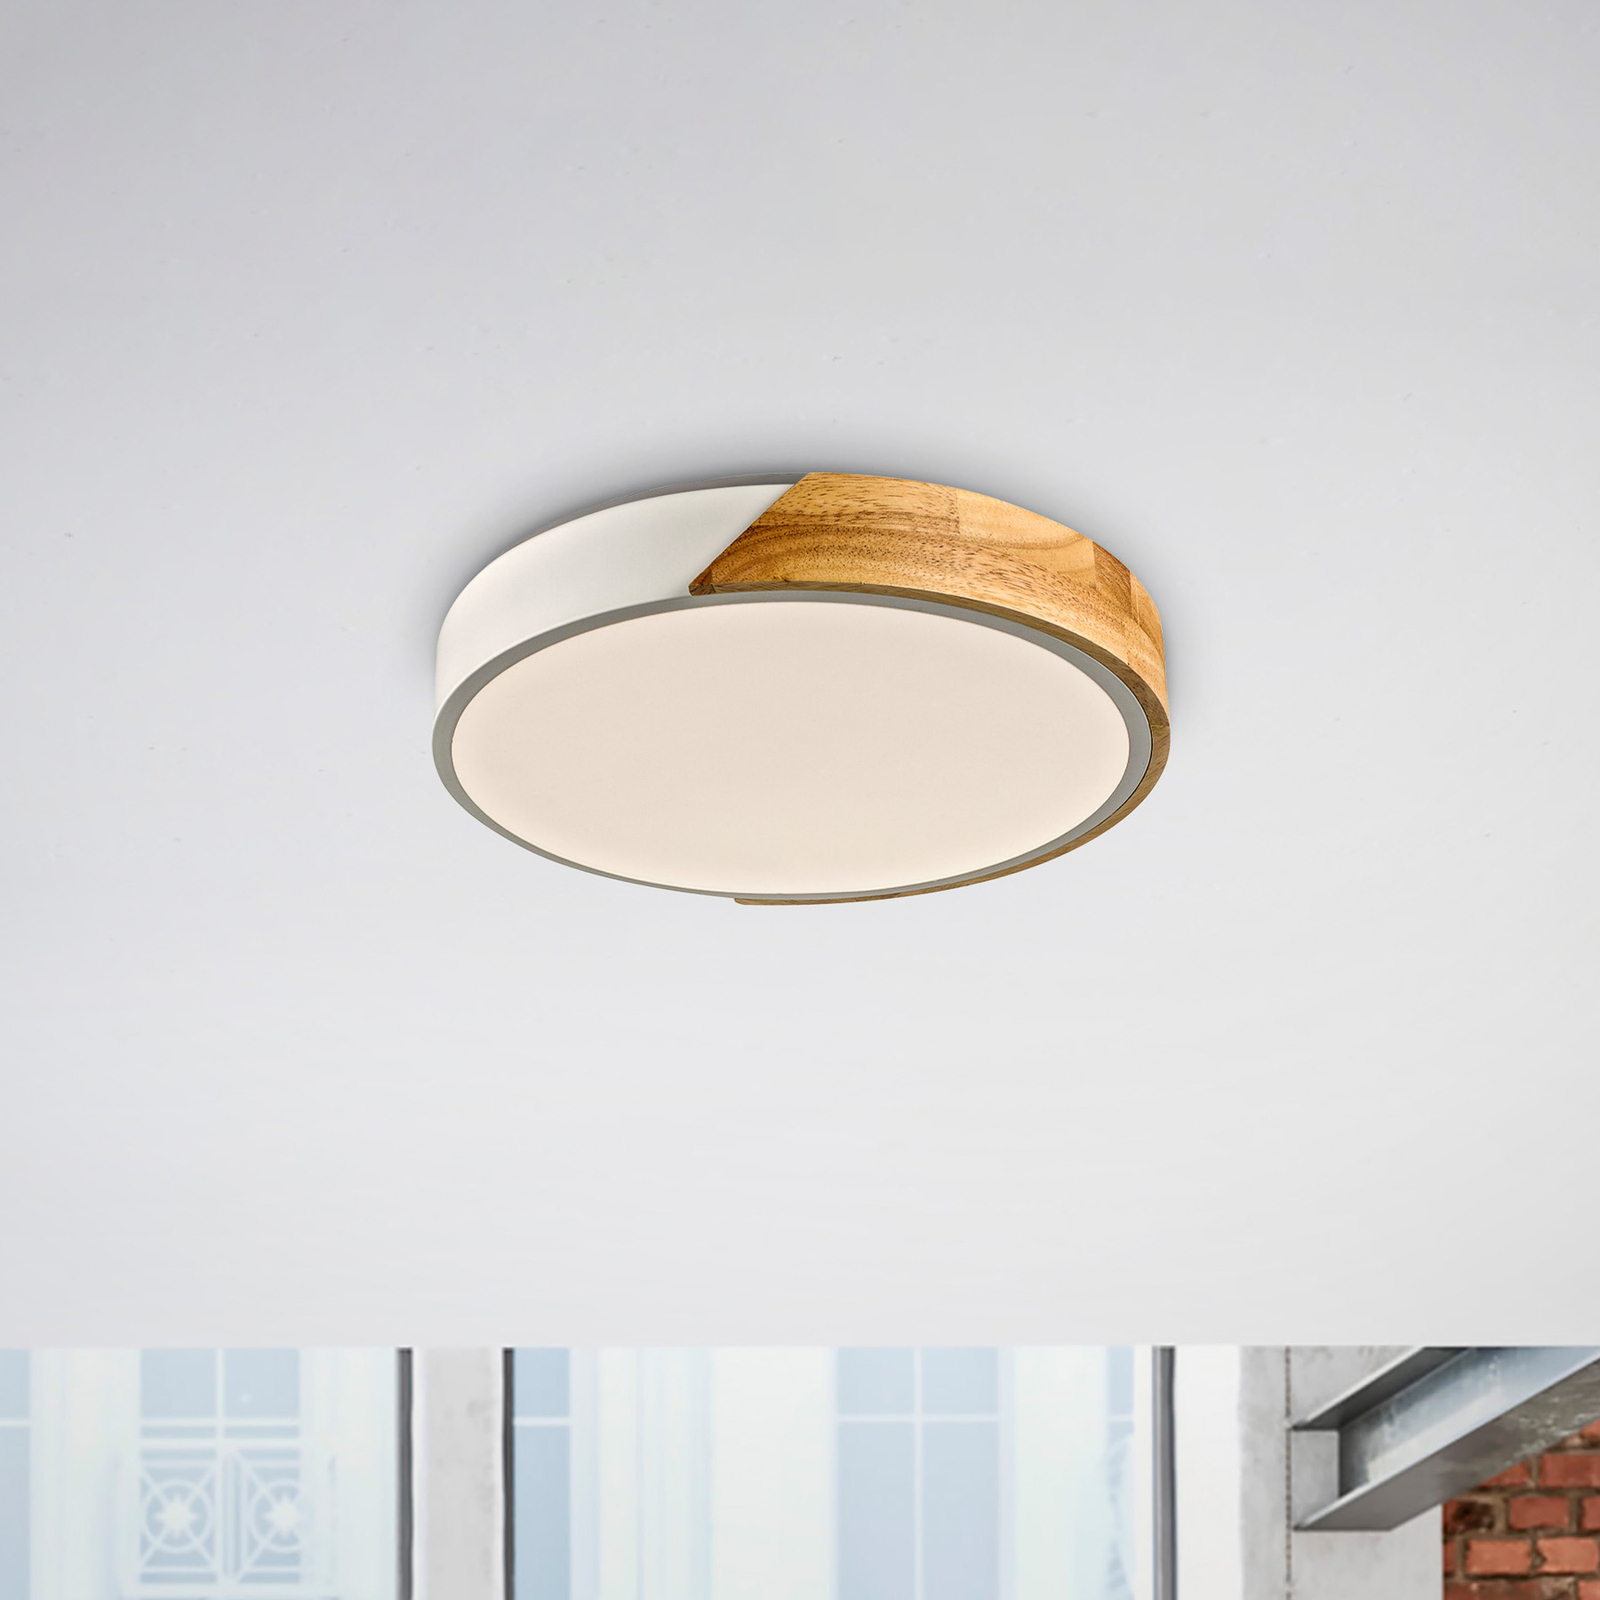 JUST LIGHT. Lampa sufitowa LED Bila, biała, Ø 32 cm, drewno